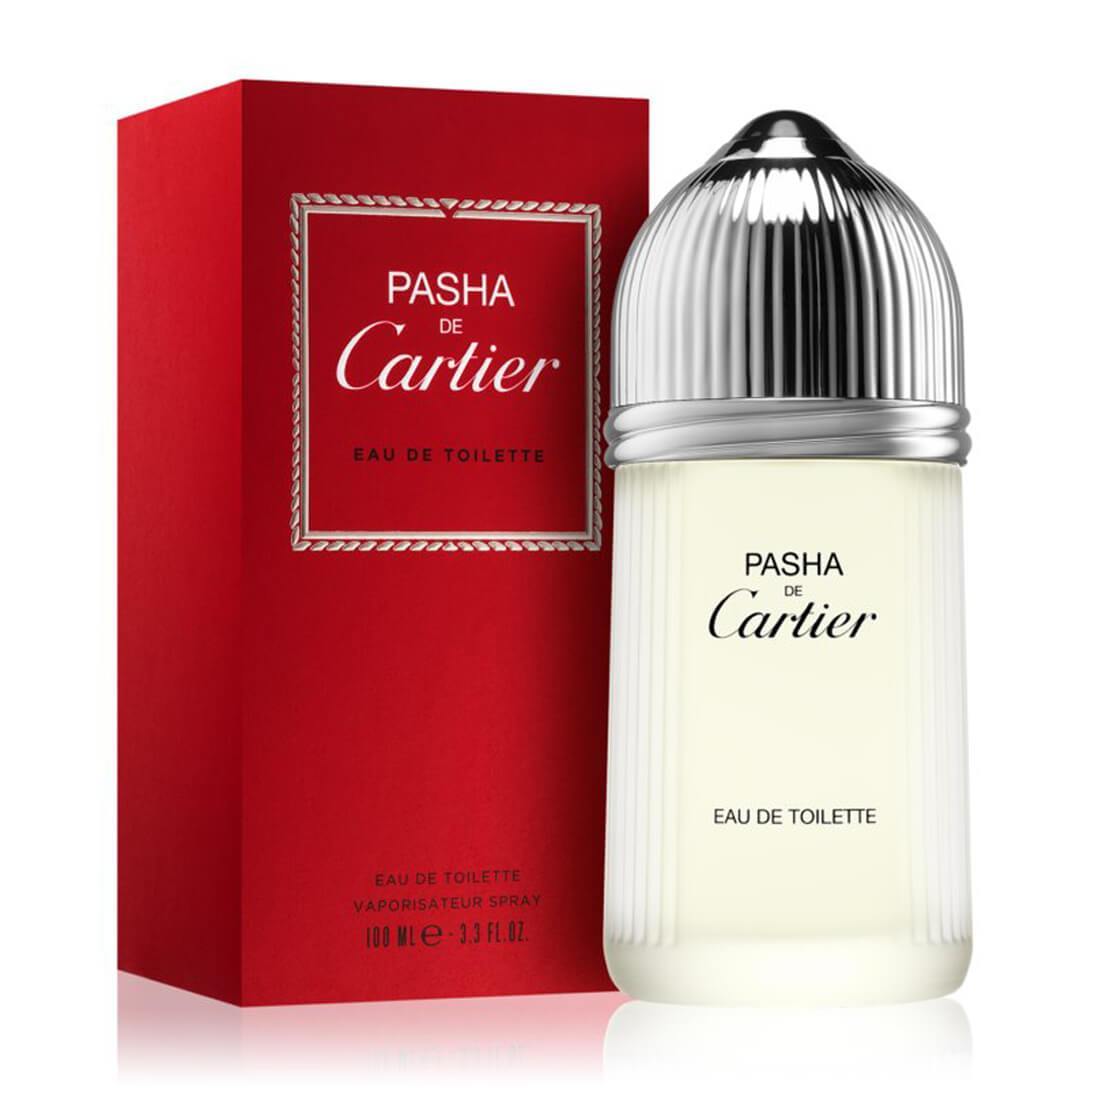 cartier pasha perfume price in india